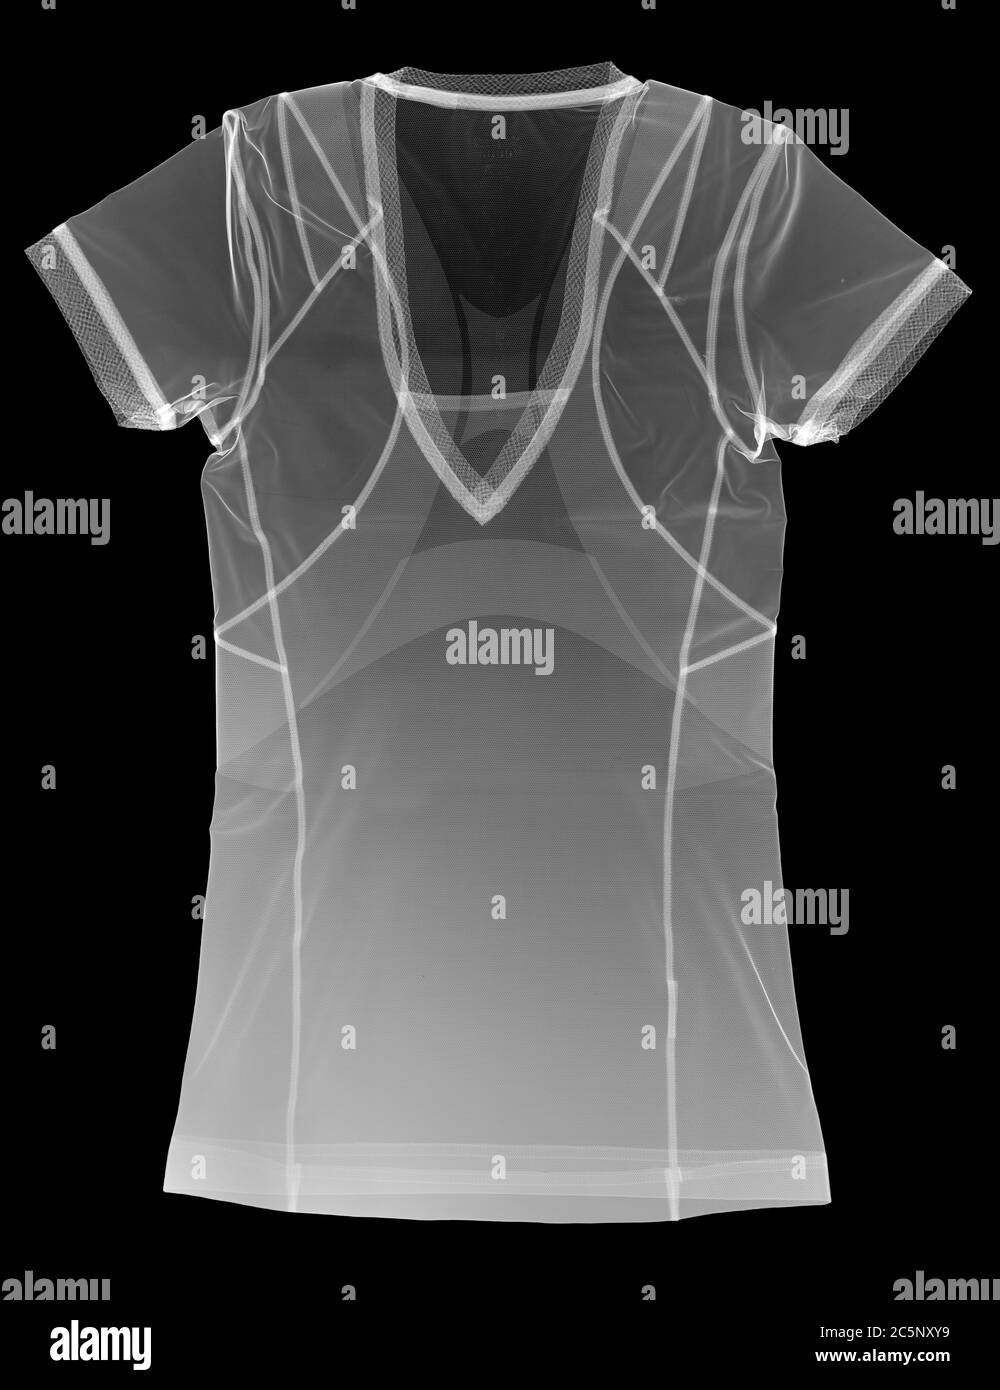 Sports t-shirt, X-ray. Stock Photo